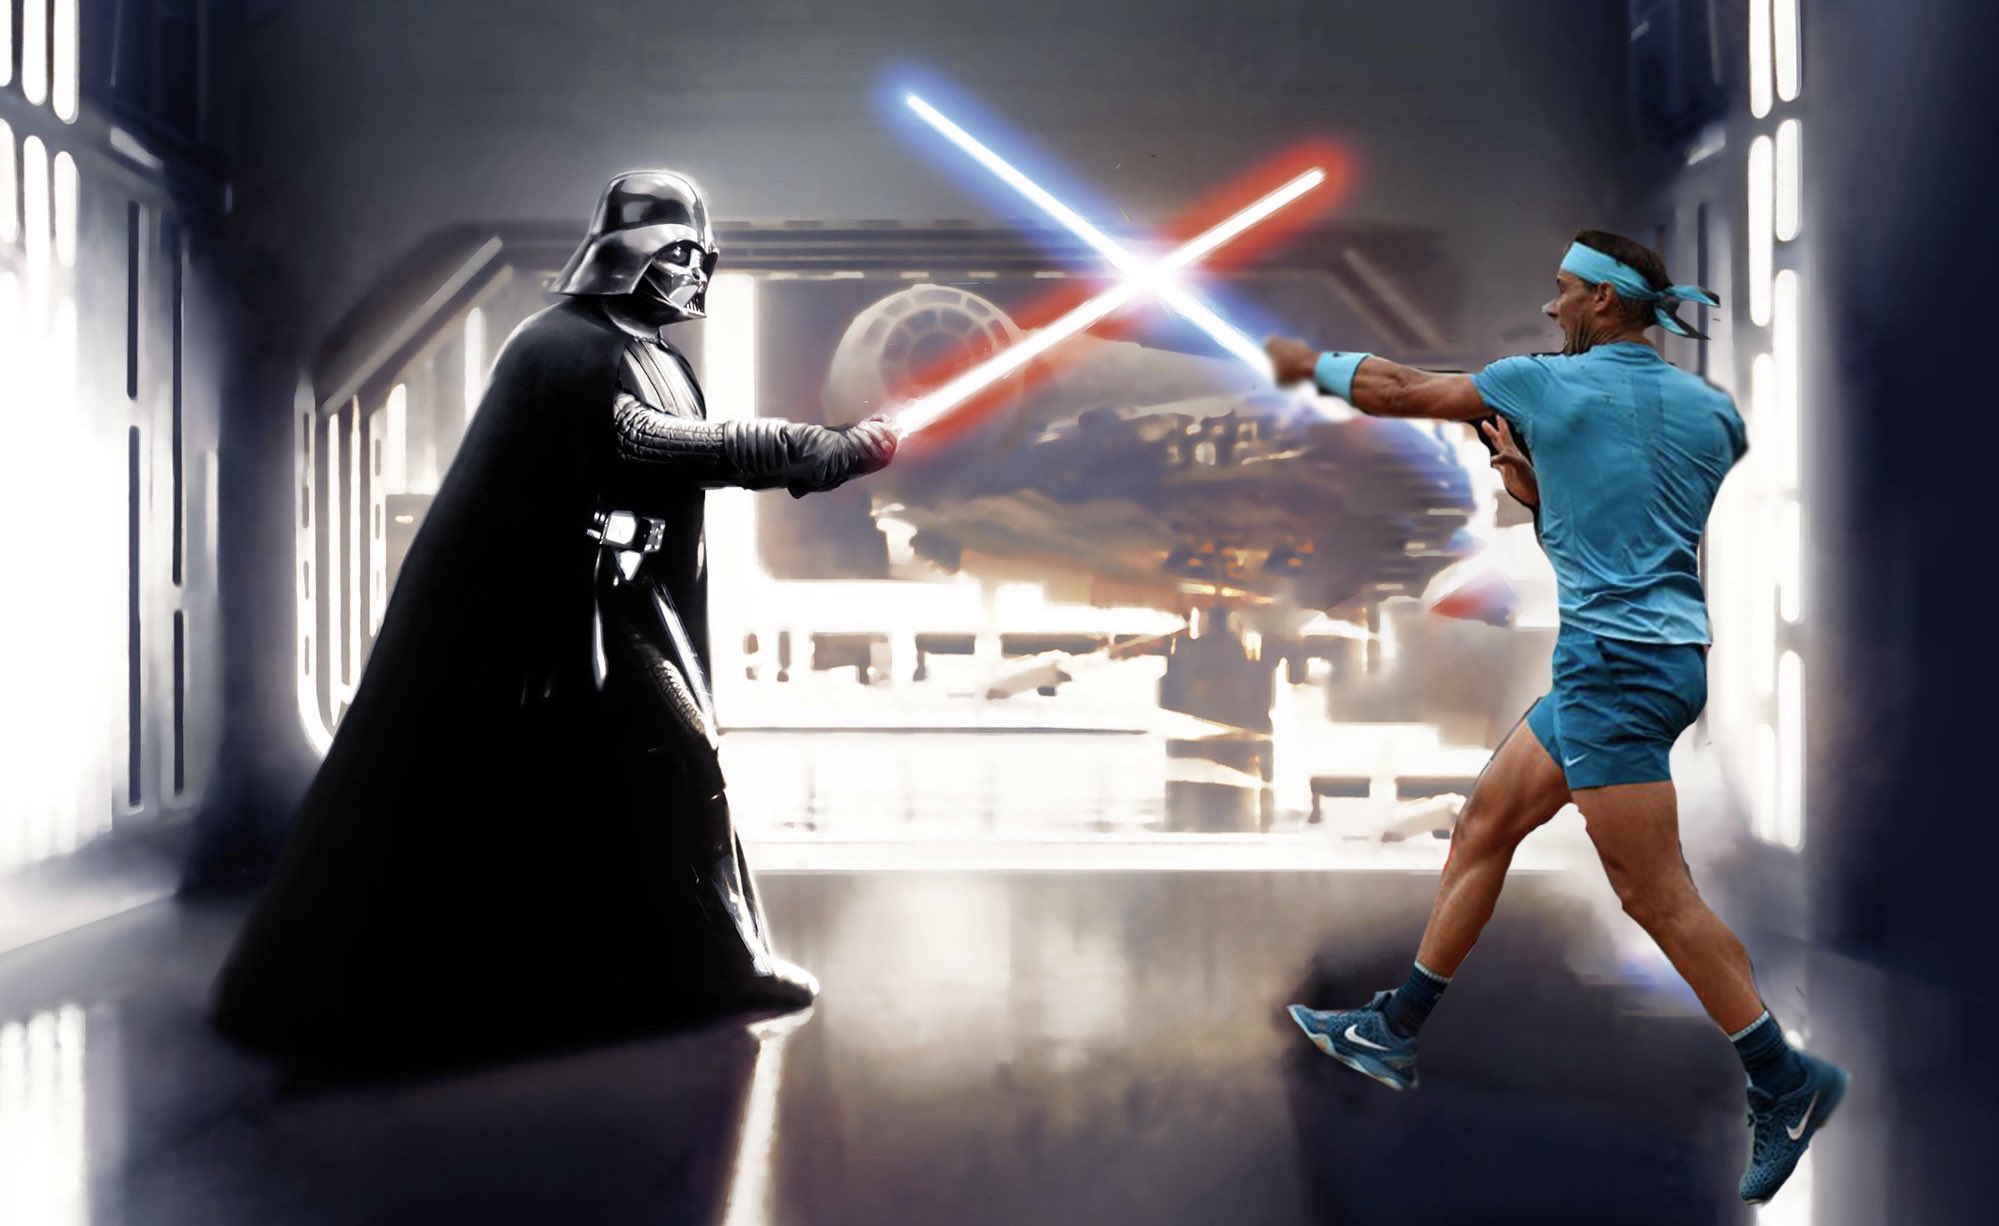 COURTS Mag Wars day #Tennis #Nadal #TennisAtHome #StarWarsDay https://t.co/vUEf0UAr8A" / Twitter